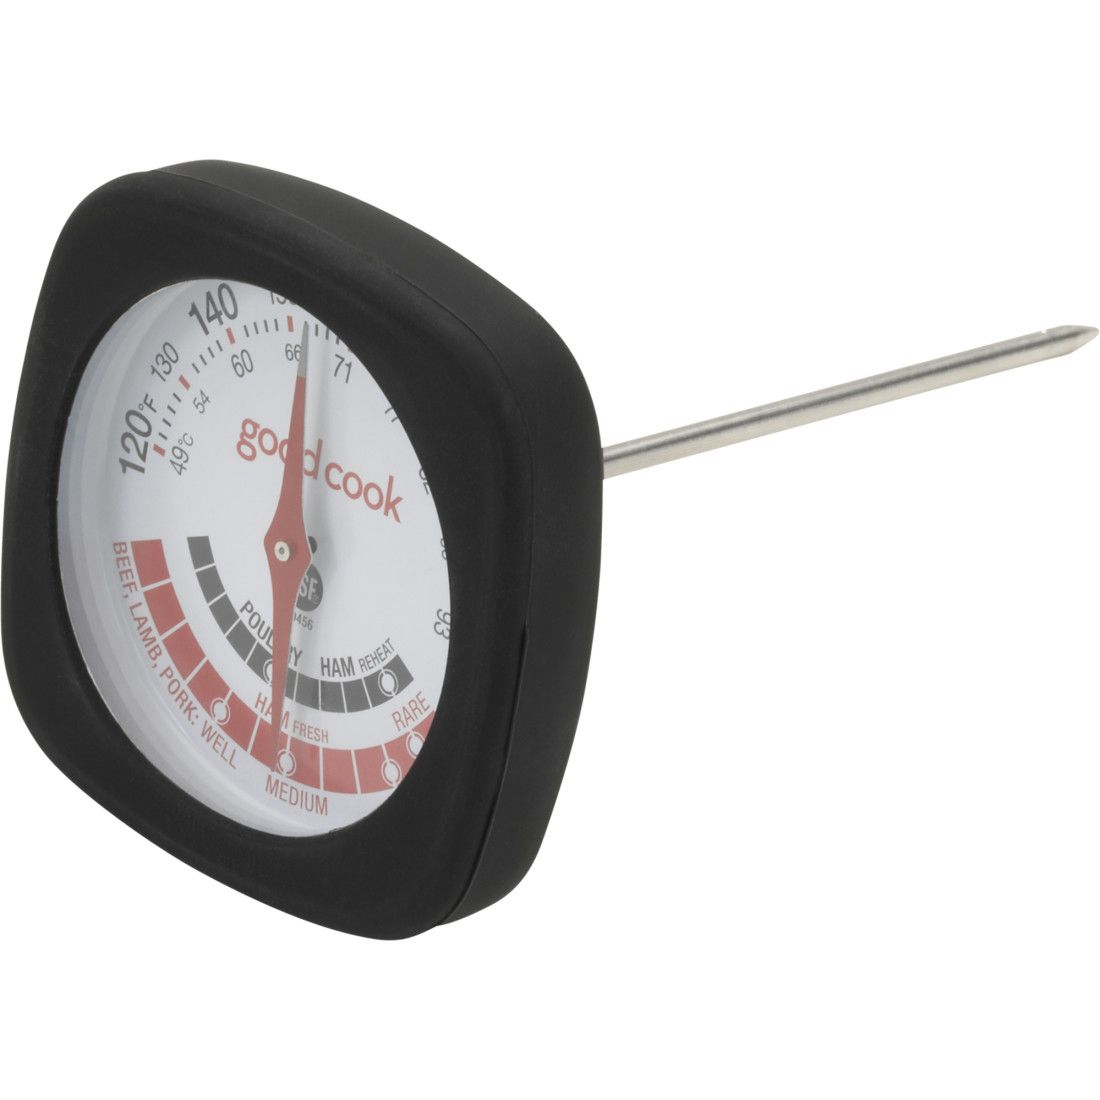 Goodcook Thermometer, Digital, Folding 1 Ea, Utensils